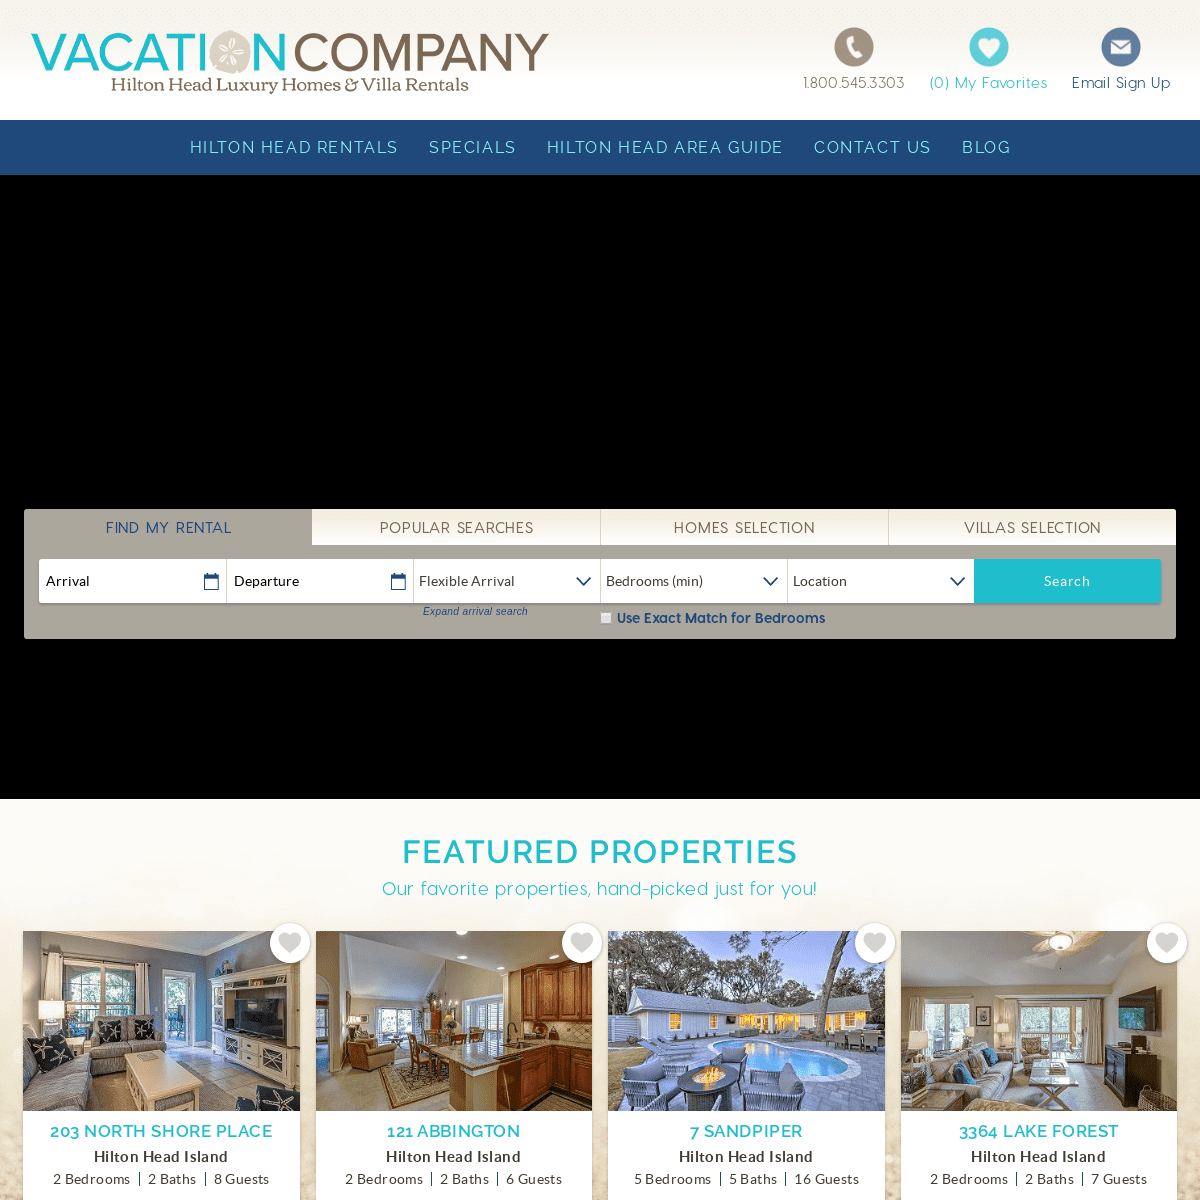 A complete backup of vacationcompany.com